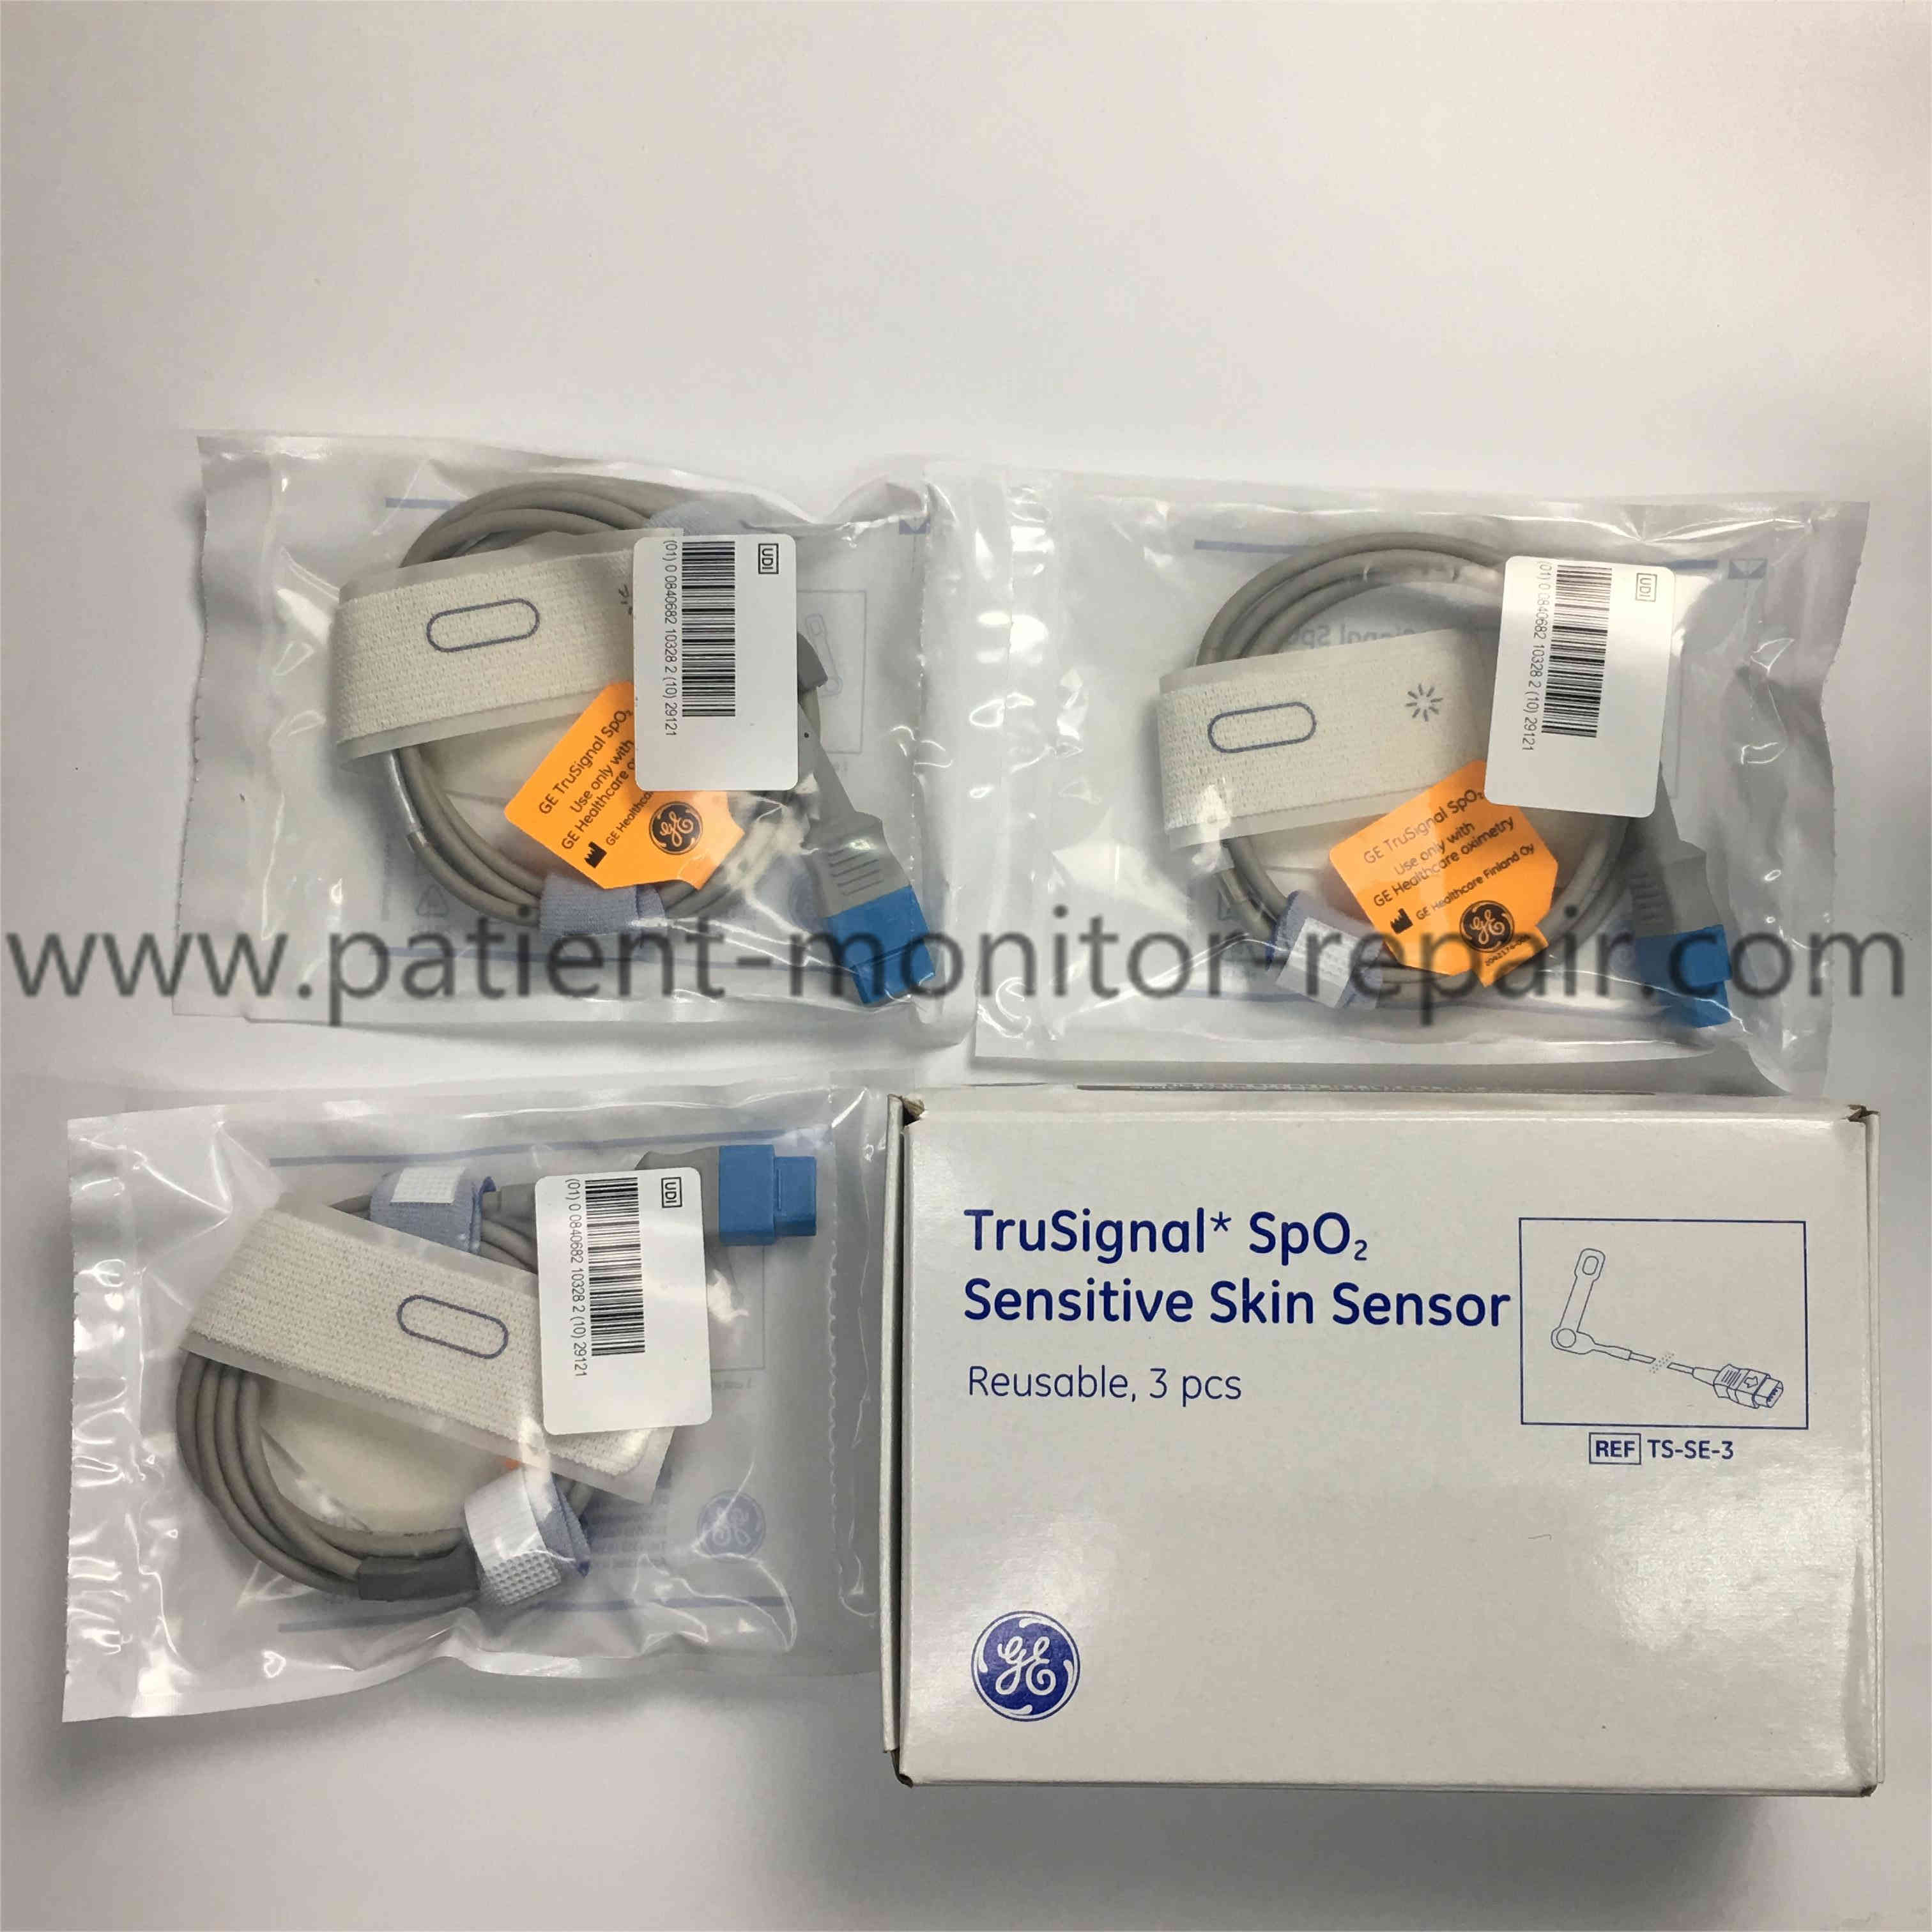 GE Datex-Ohmeda TruSignal SpO2 Sensitive Skin Sensor Reusable TS-SE-3 2073343-001 - 1.jpg